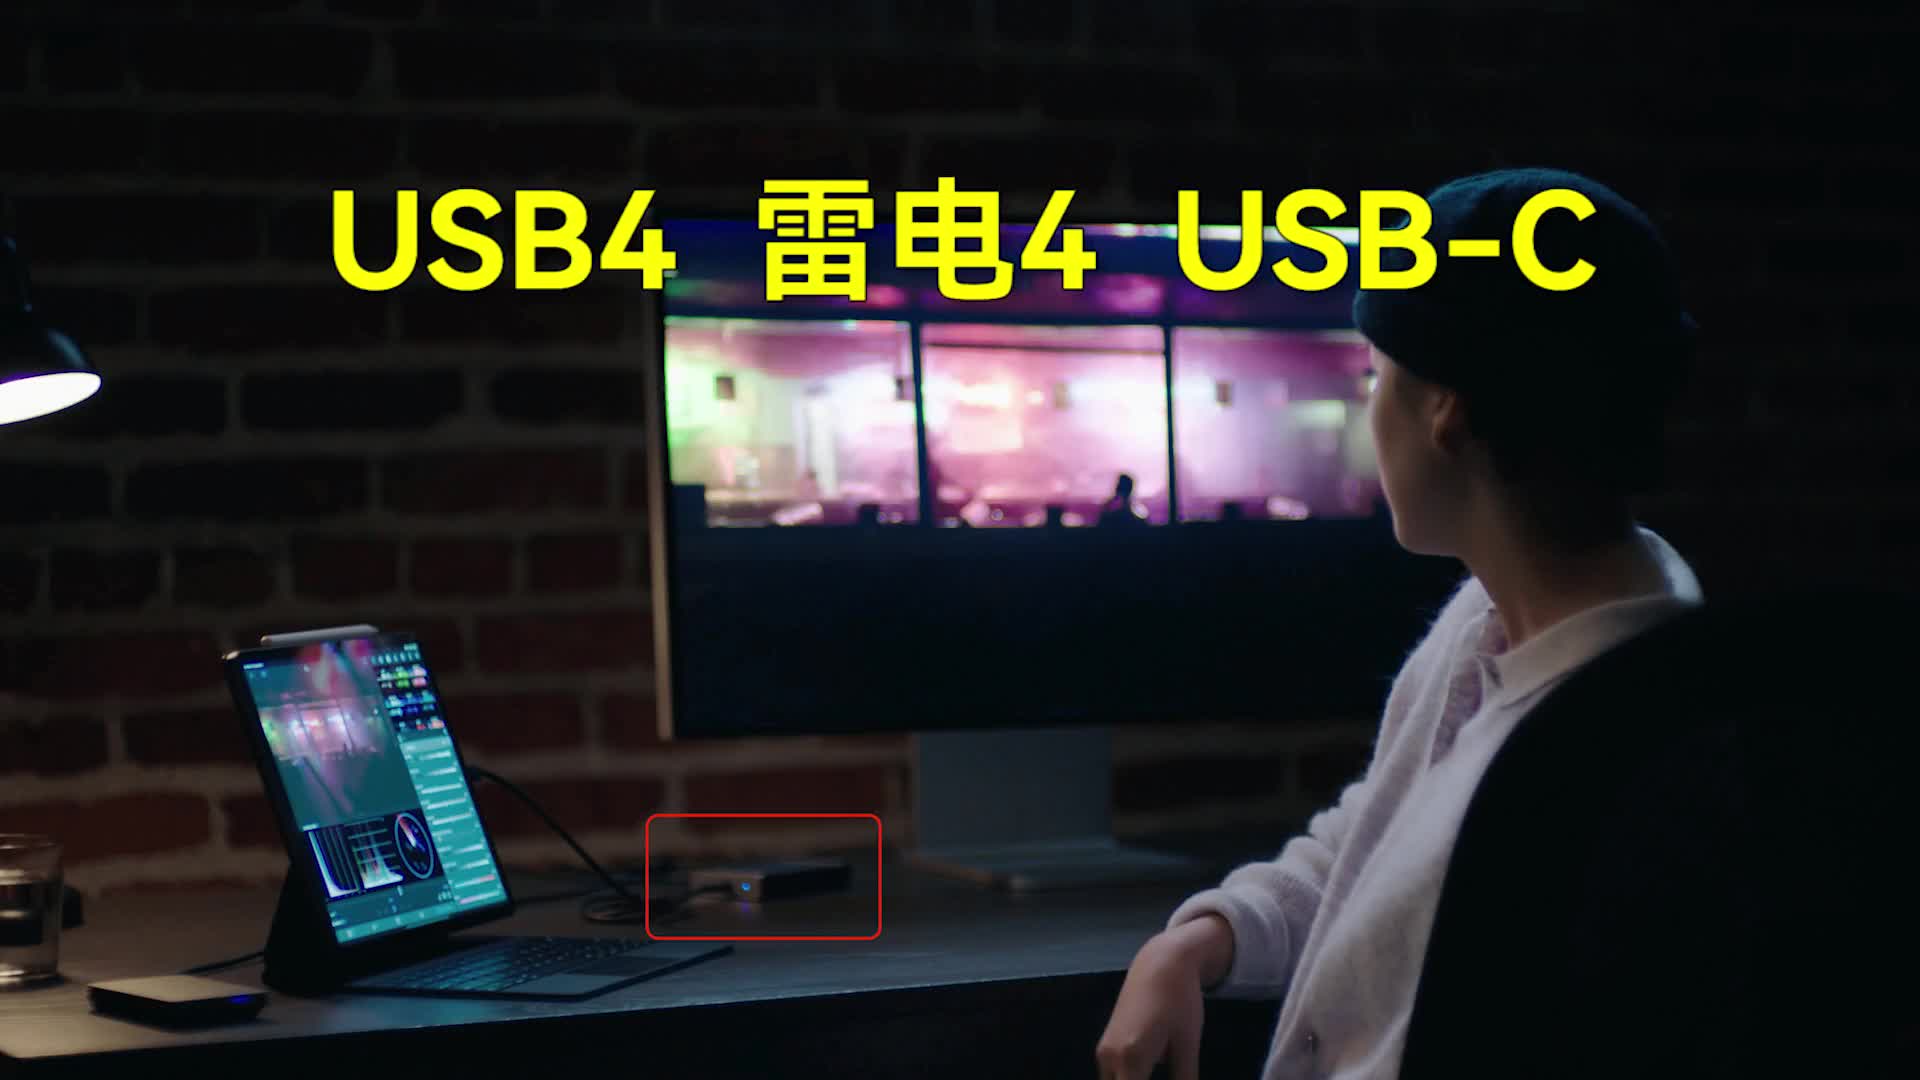 USB4，雷电4，USB-C接口看起来都一样，究竟有什么区别？#硬声创作季 